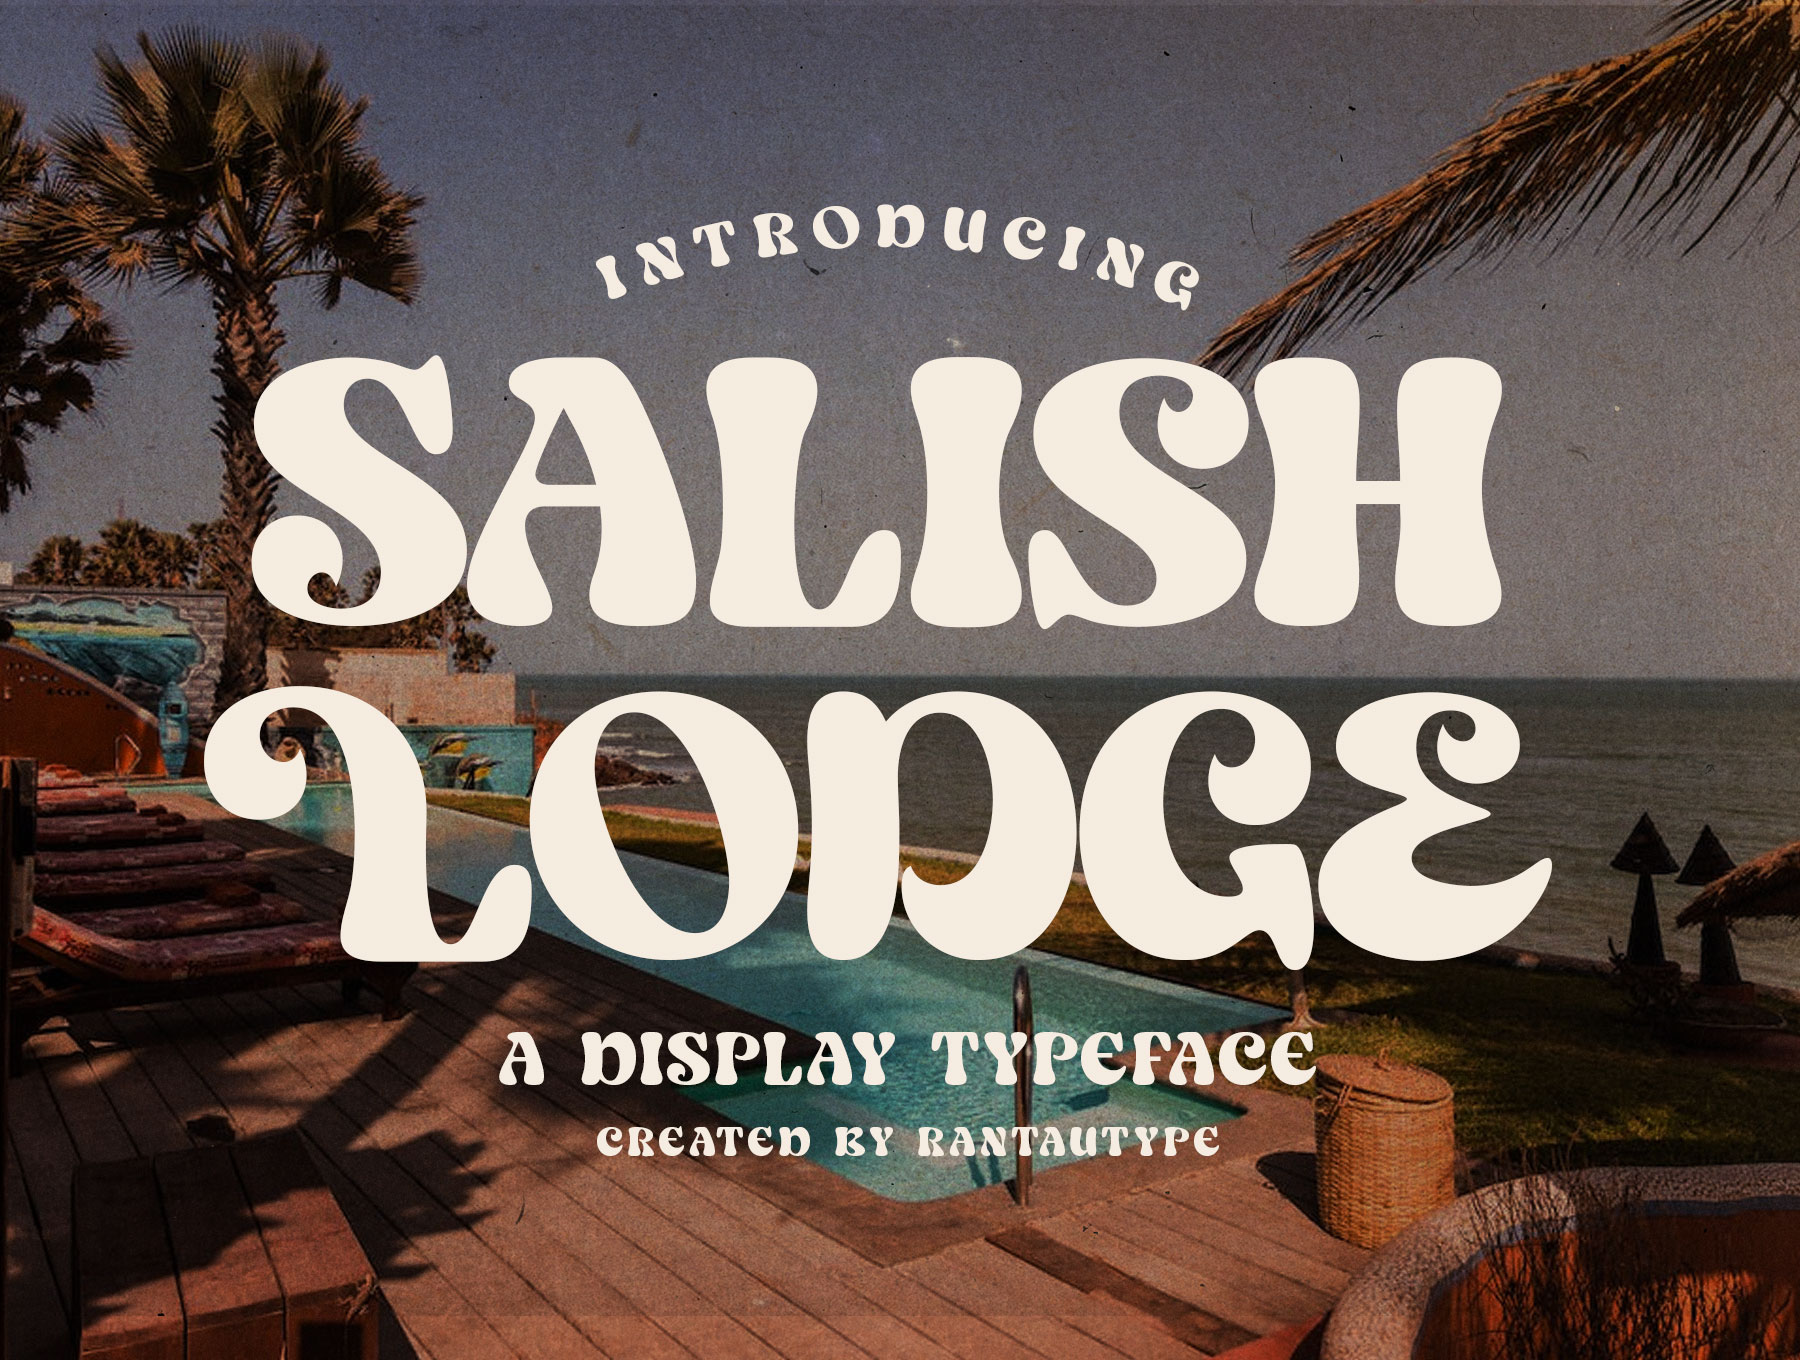 Salish Lodge a Display Typeface